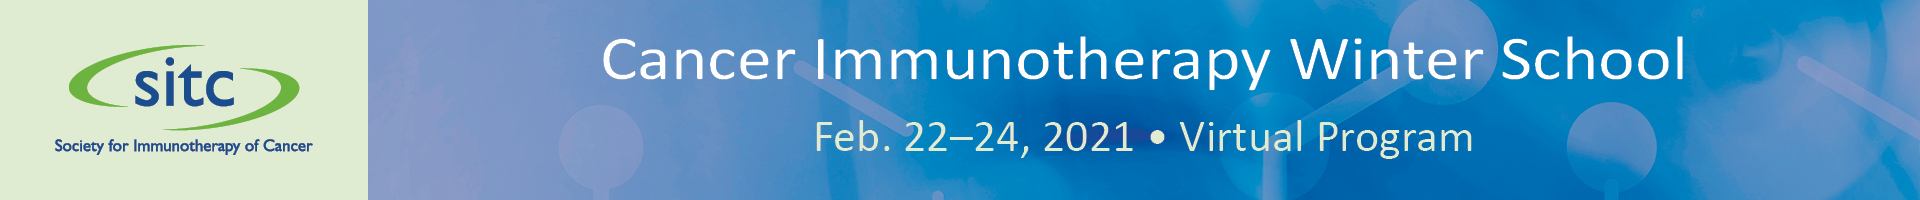 Cancer Immunotherapy Winter School: Travel Award Event Banner